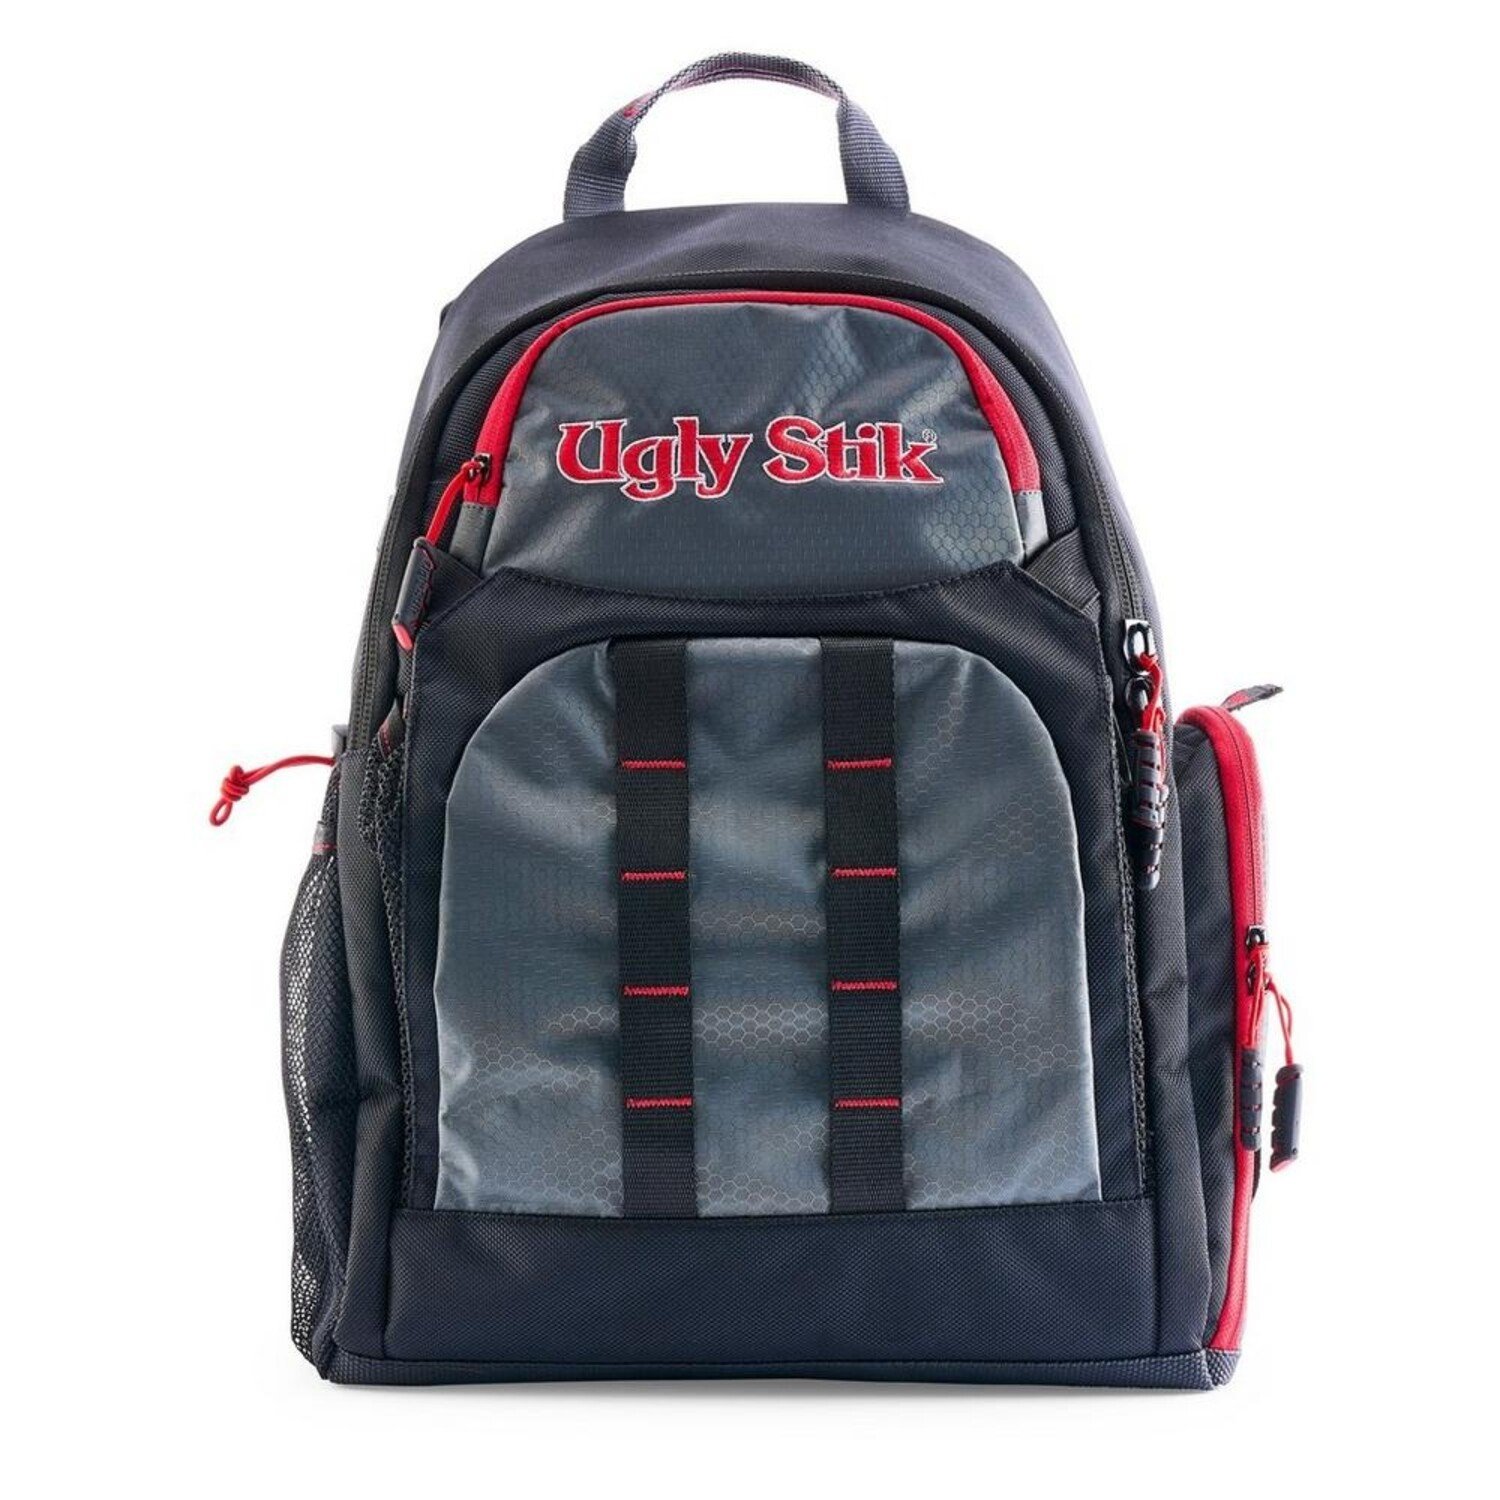 Ugly Stik 3600 Backpack - Fin-atics Marine Supply Ltd. Inc.